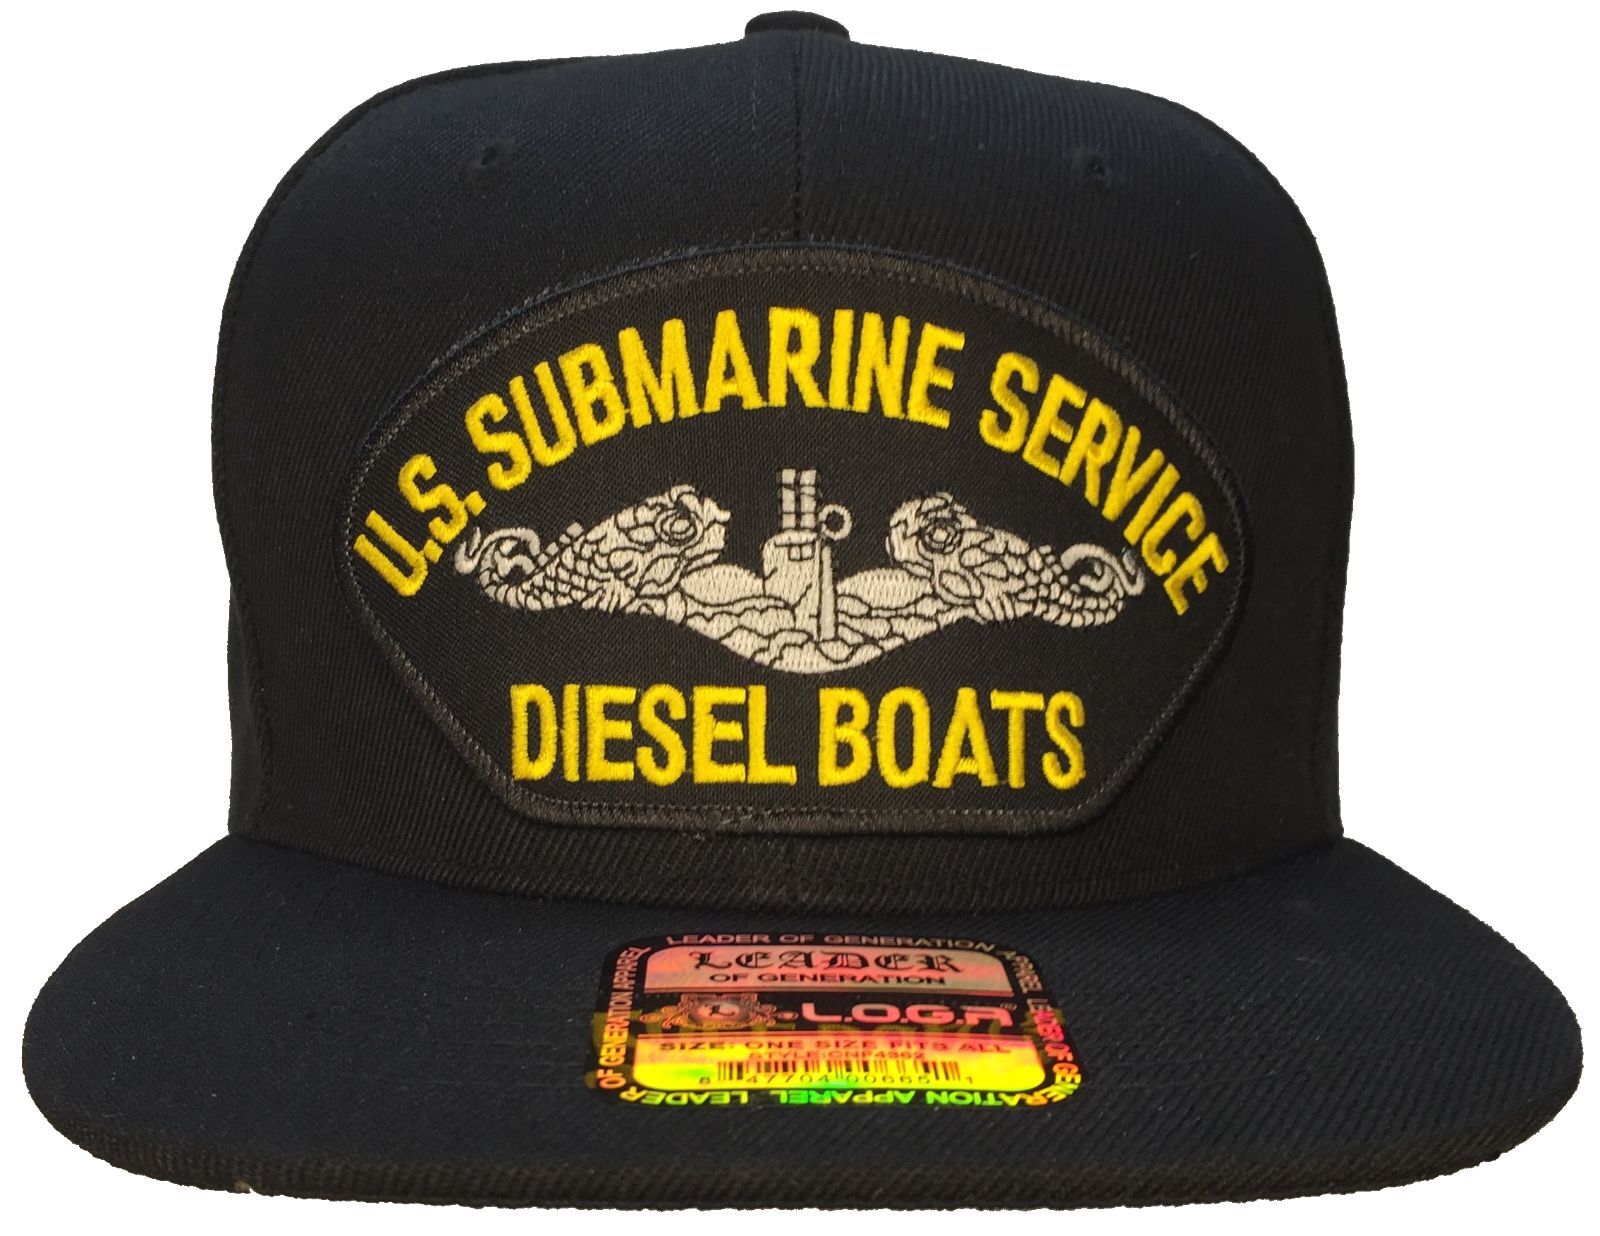 U.S. Submarine Service Veteran Hat BLACK Ball Cap DIESEL BOATS Hat OG SNAPBACK